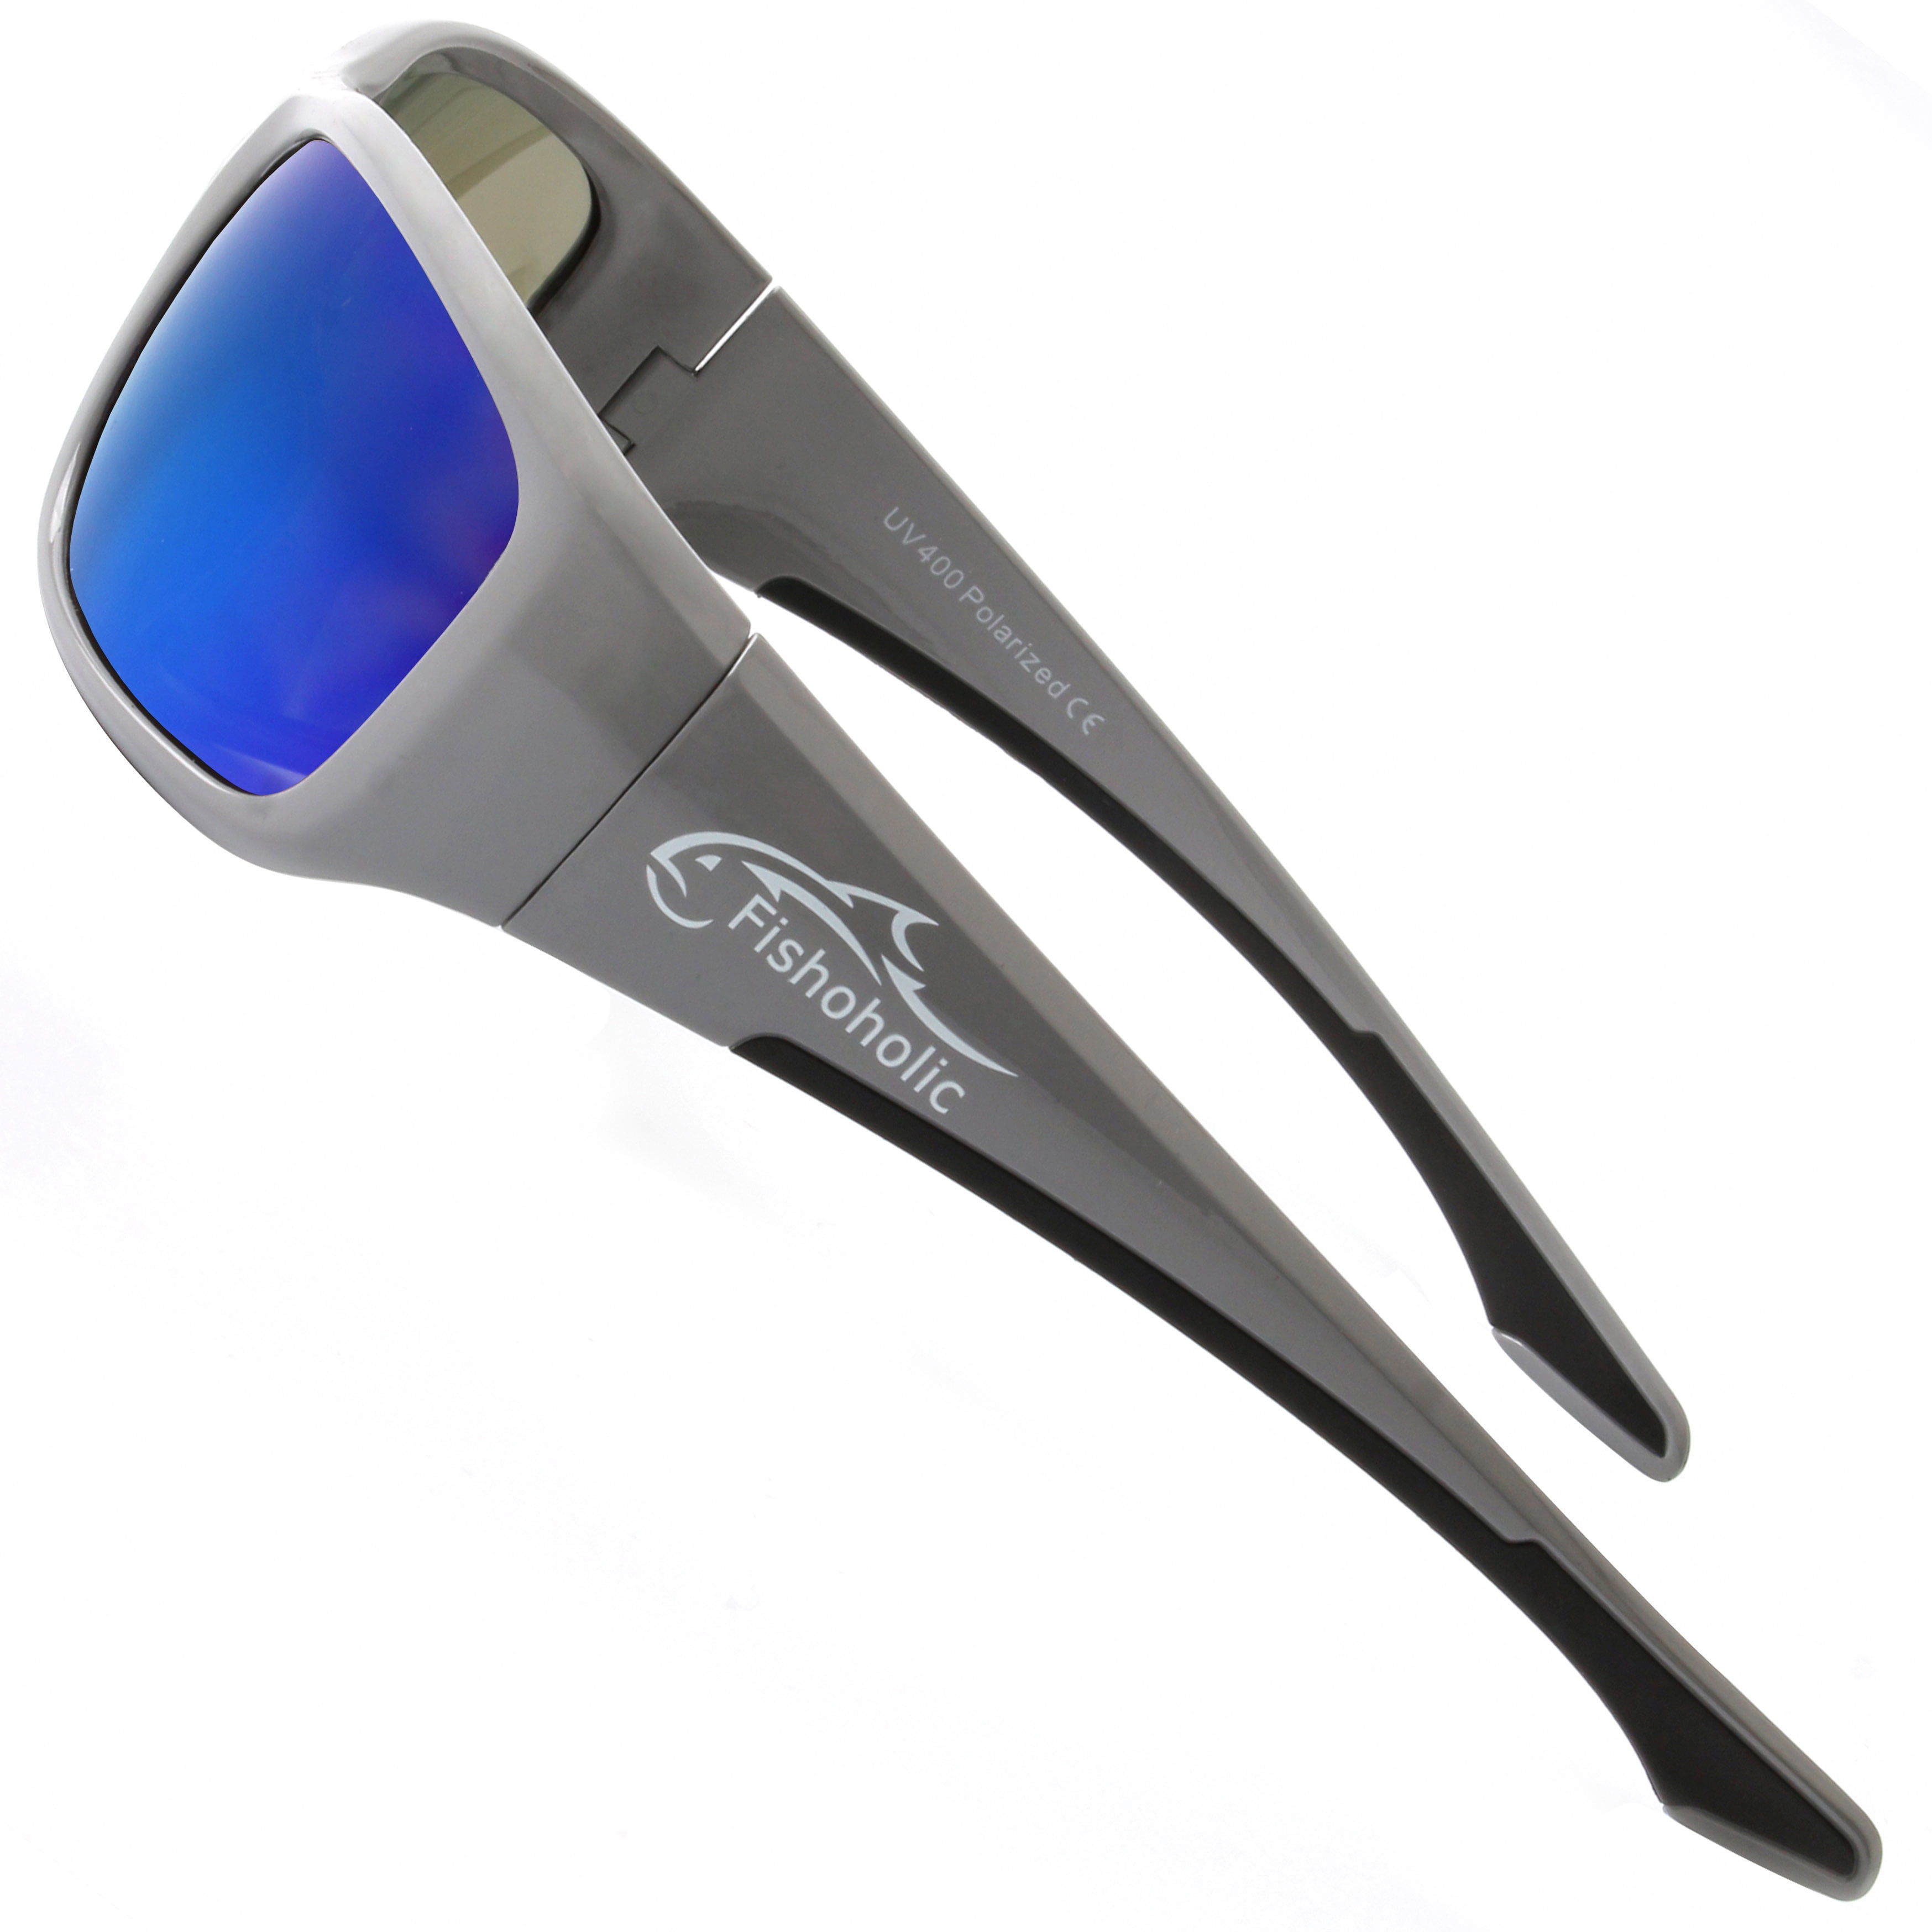 Fishoholic Pro Series Polarized Fishing Sunglasses - 5 Colors - L/XL -  Camo, Blue Mirror, Black - UV400 (gGRY-BLU-blk) 